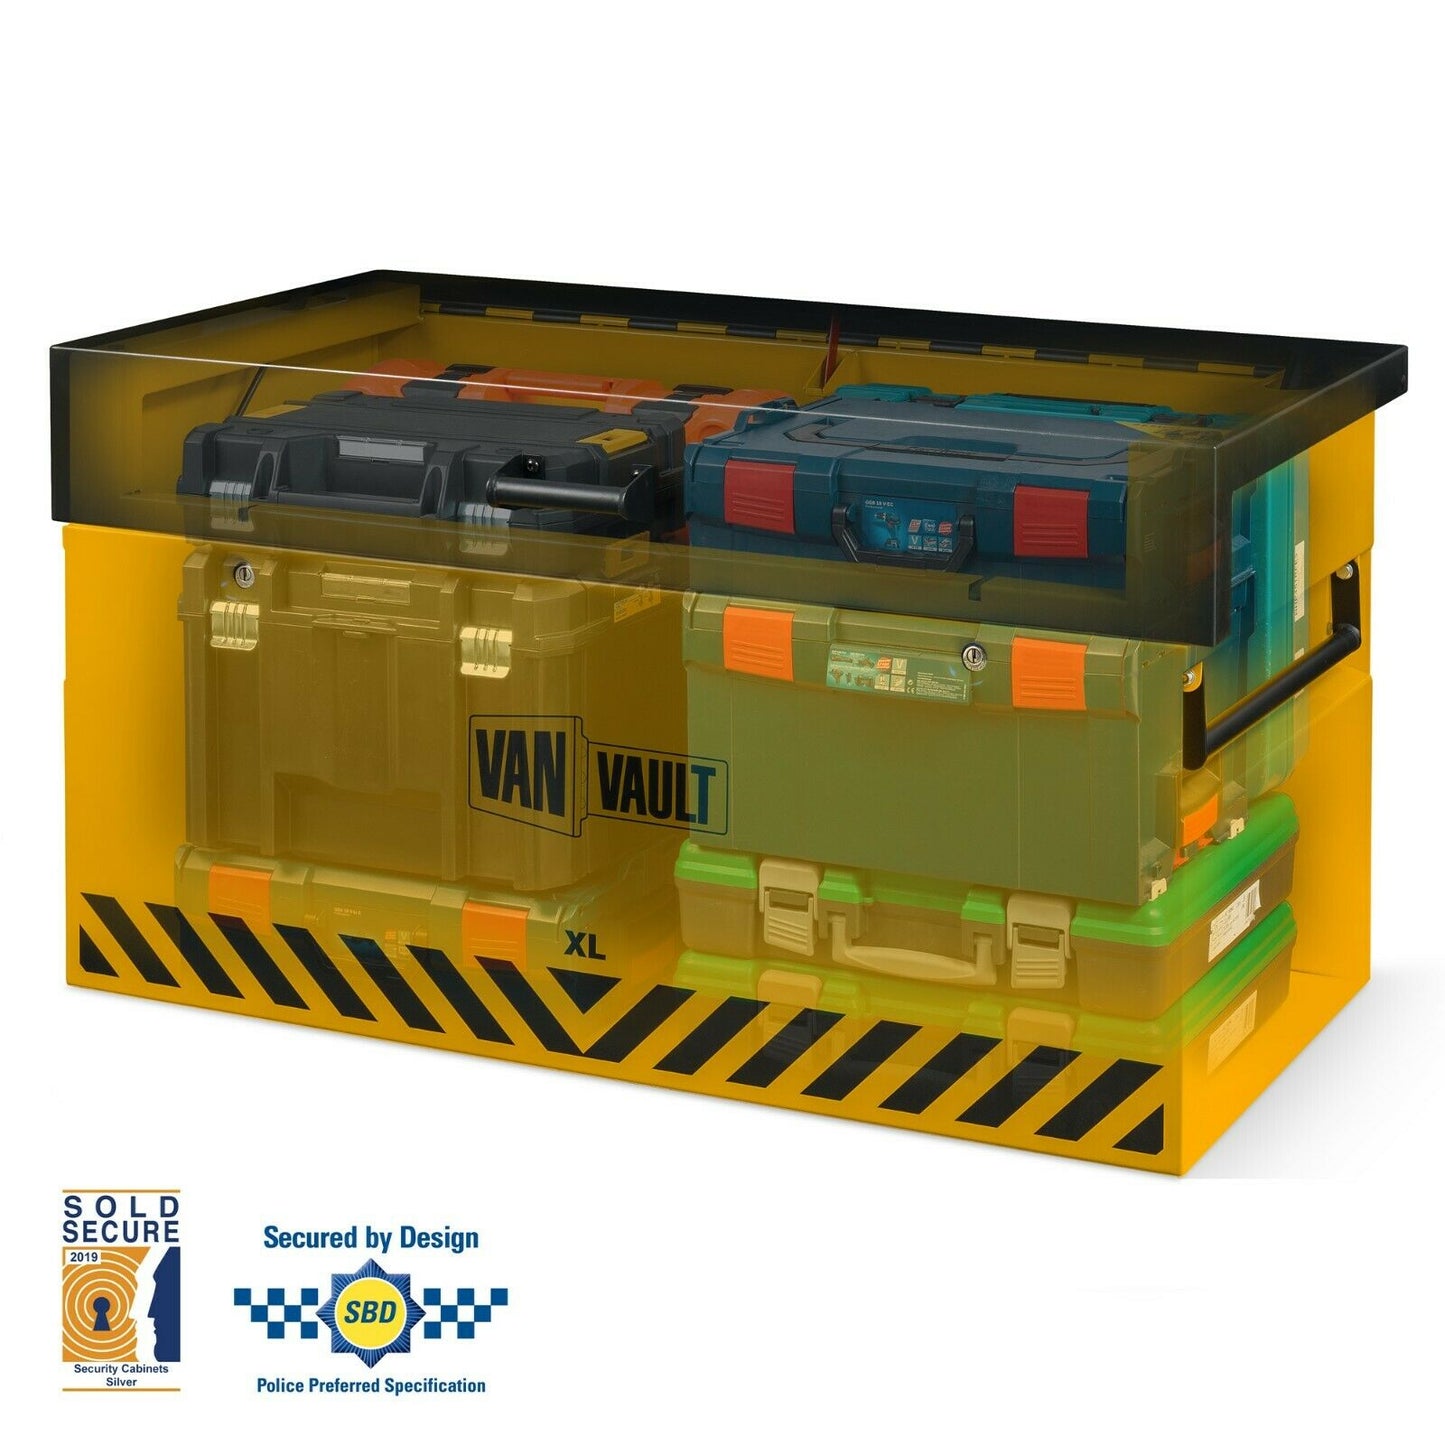 Van Vault XL S10840 Heavy Duty Secure Vehicle Trade Security Tool Box